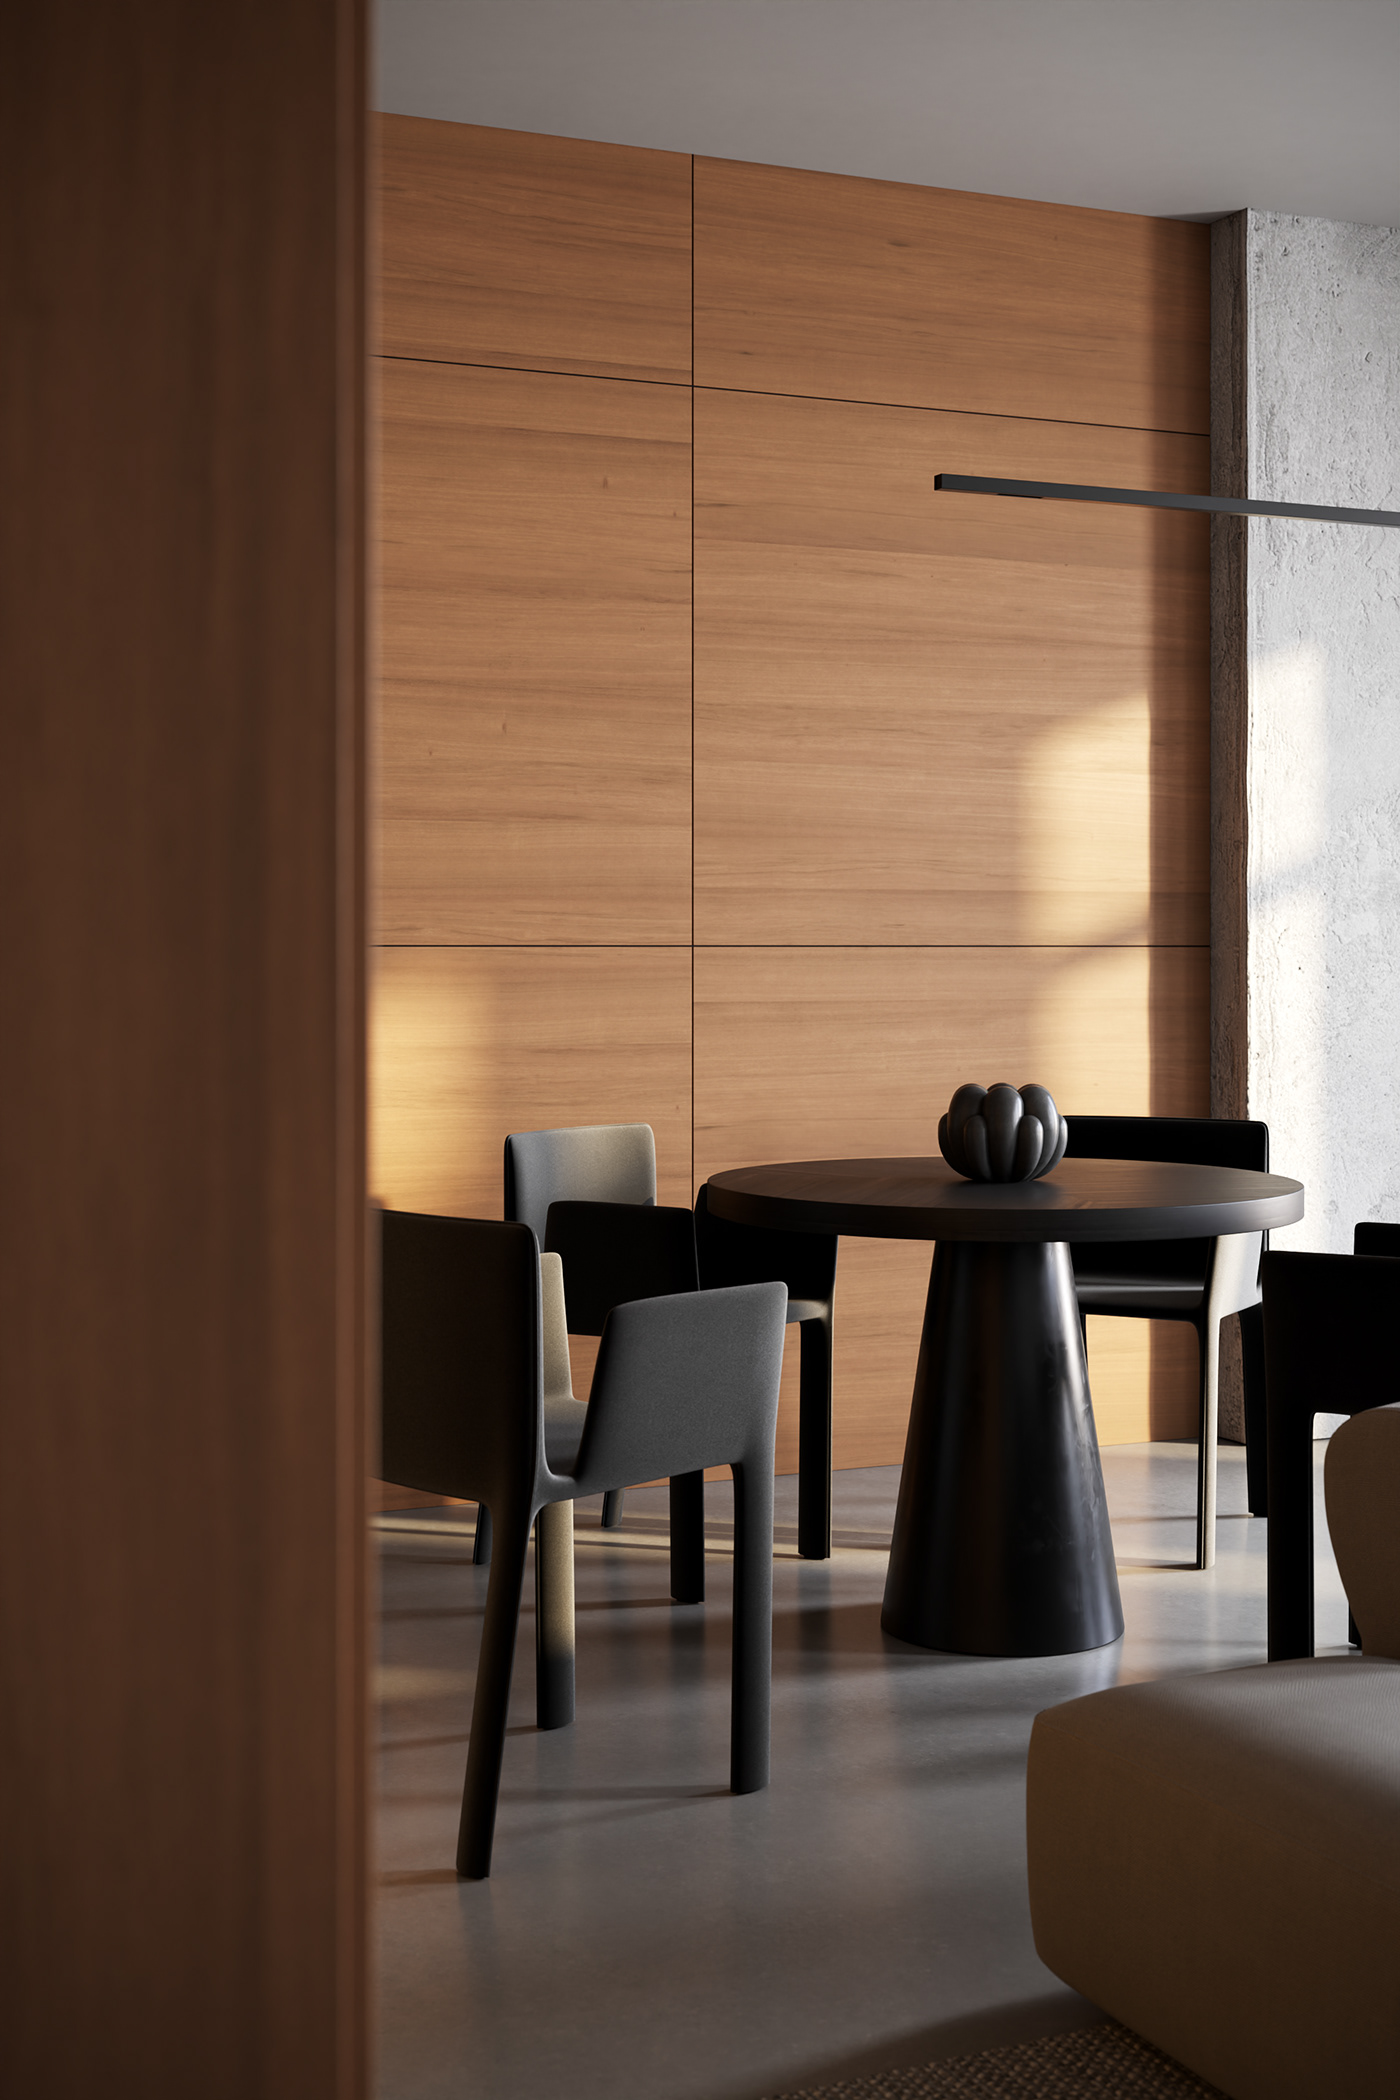 interior design  architecture visualization Interior kitchen bedroom 3D minimal Project modern